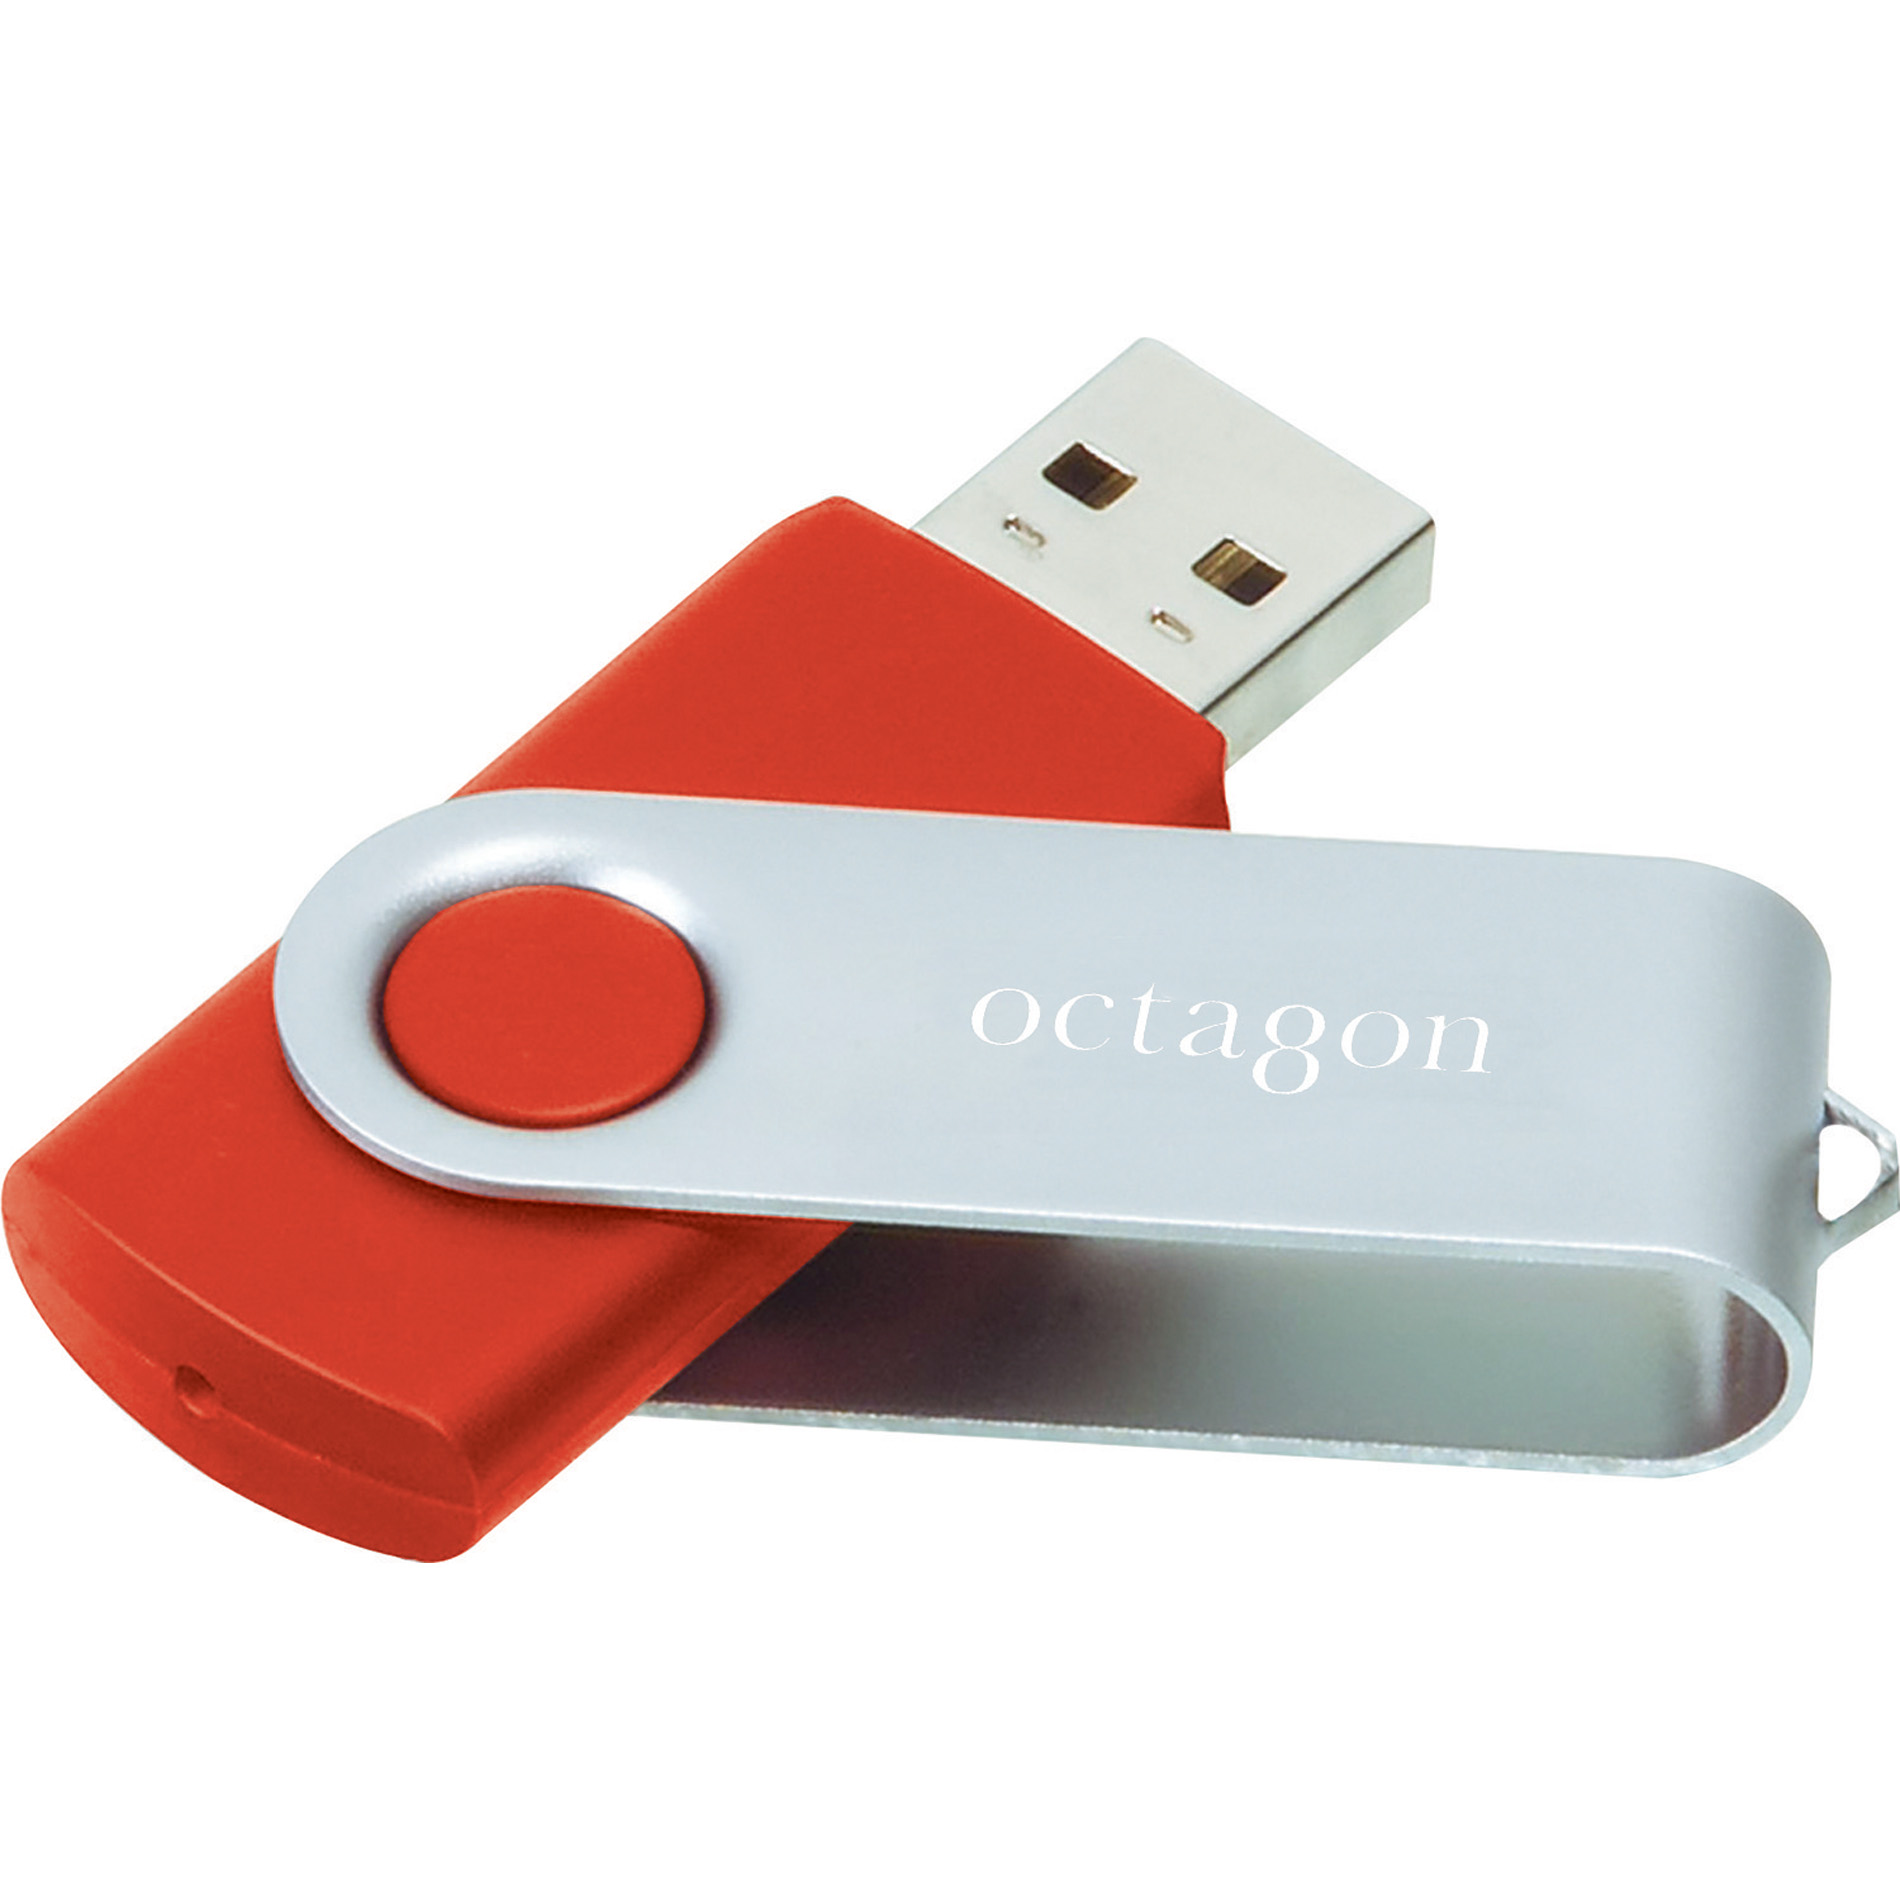 Promotional USB.jpg